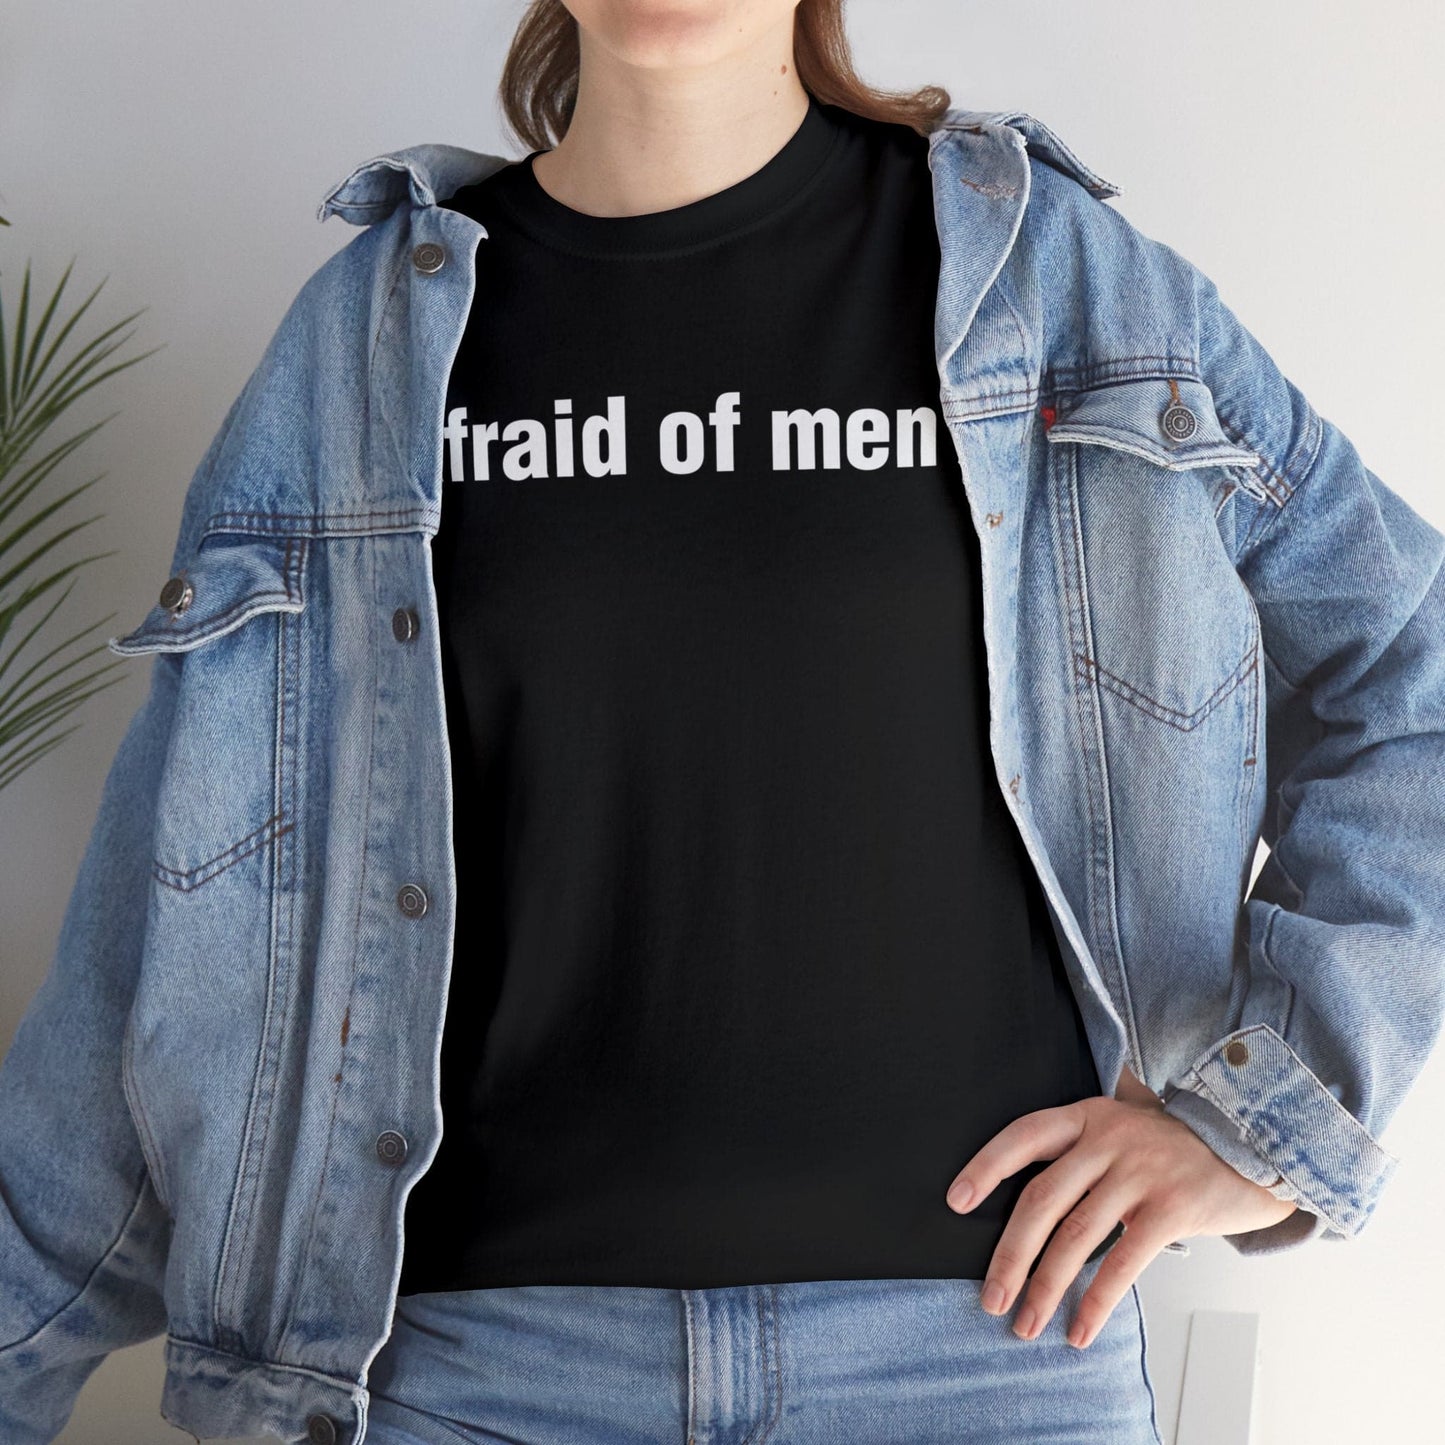 afraid of men